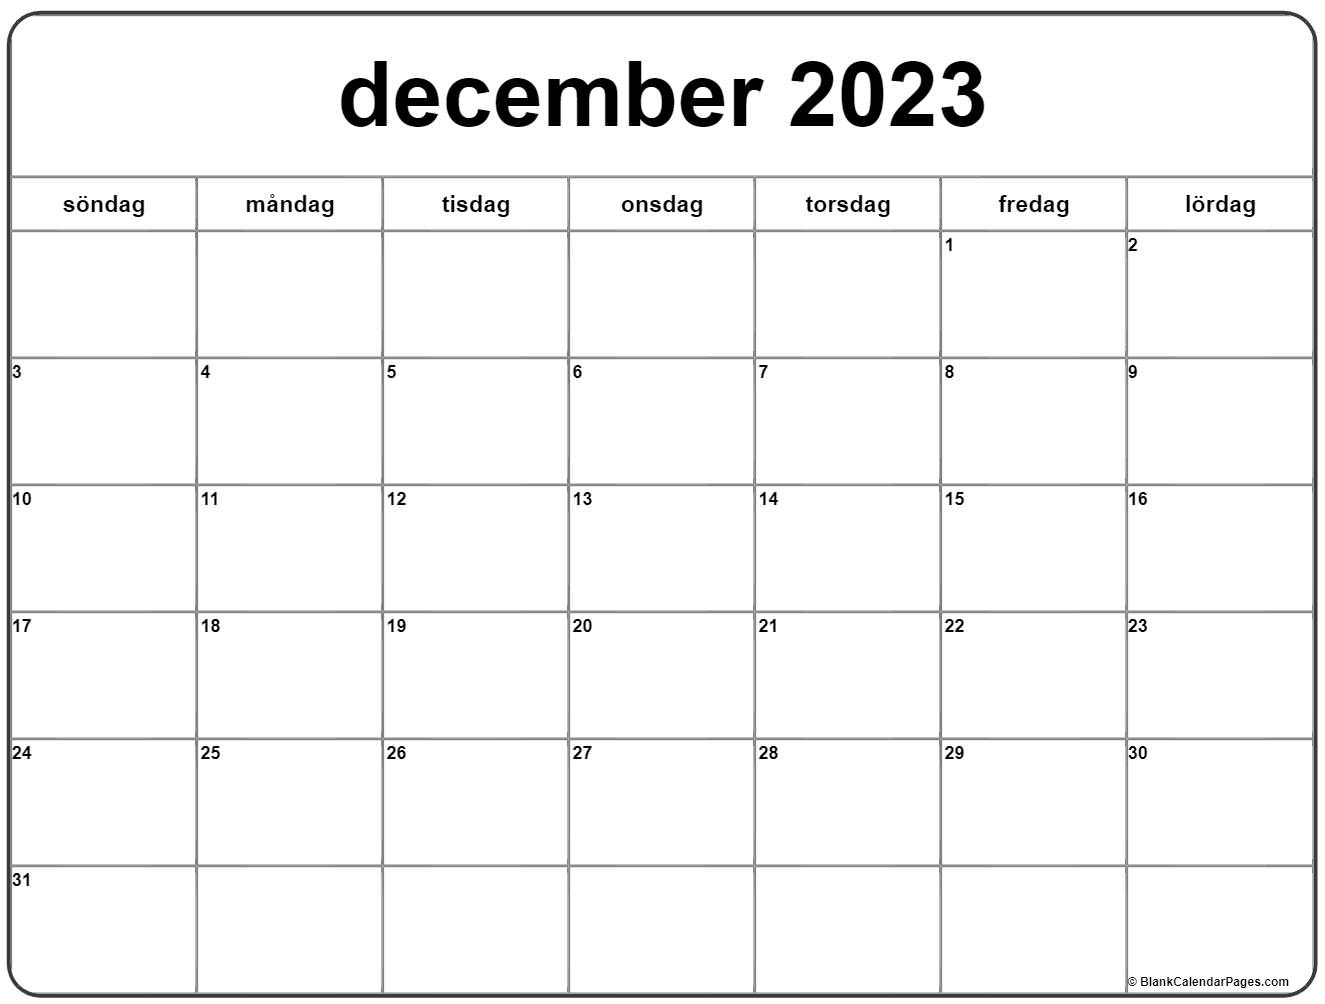 december 2023 kalender Svenska Kalender december